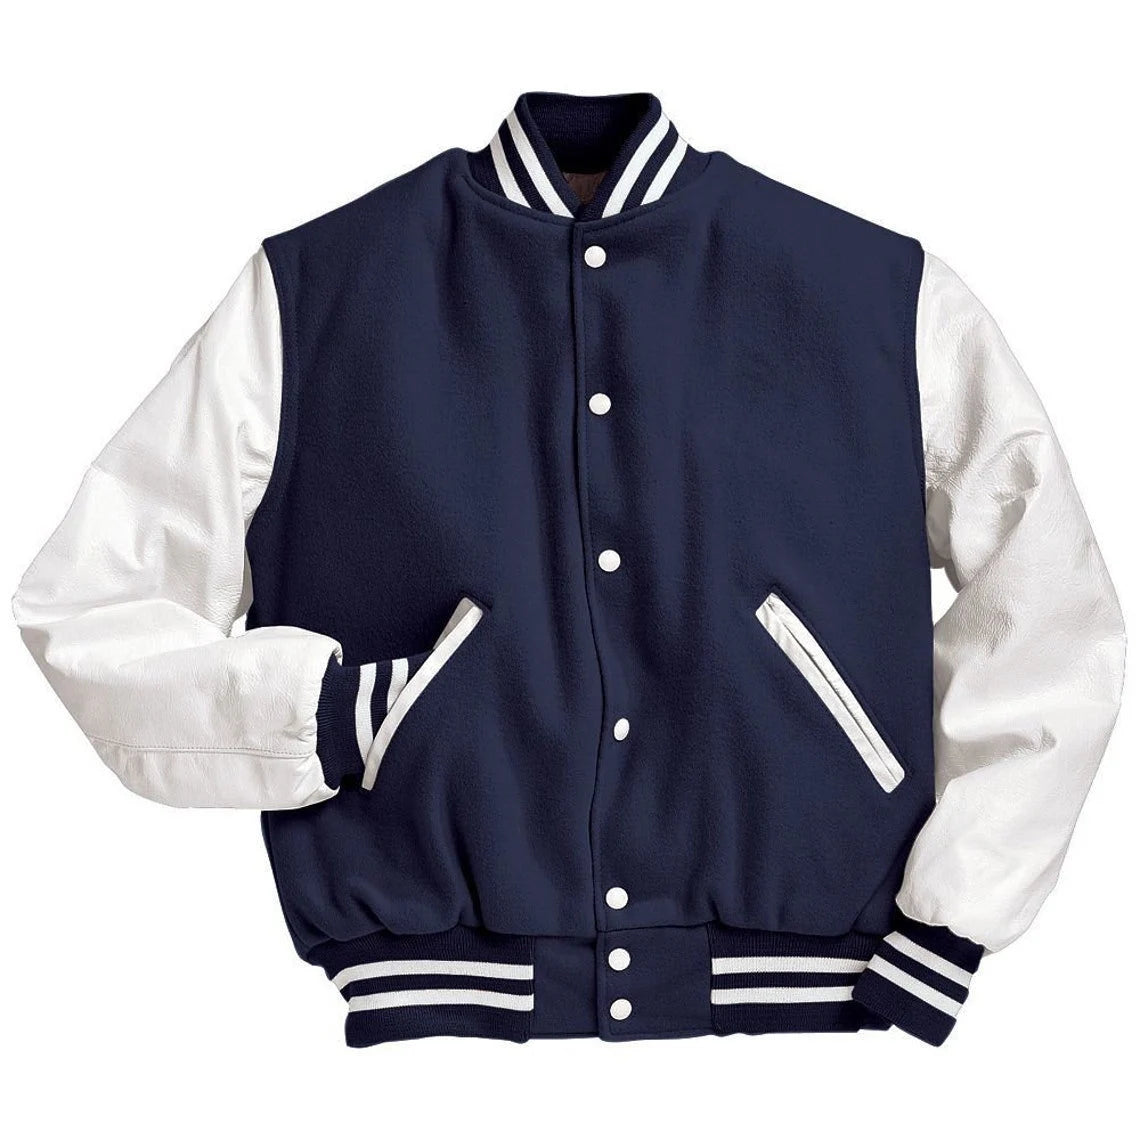 Blue and White Men's Varsity Baseball Jacket Real / Synthetic Leather Sleeves Wool Letterman Boys Jacket